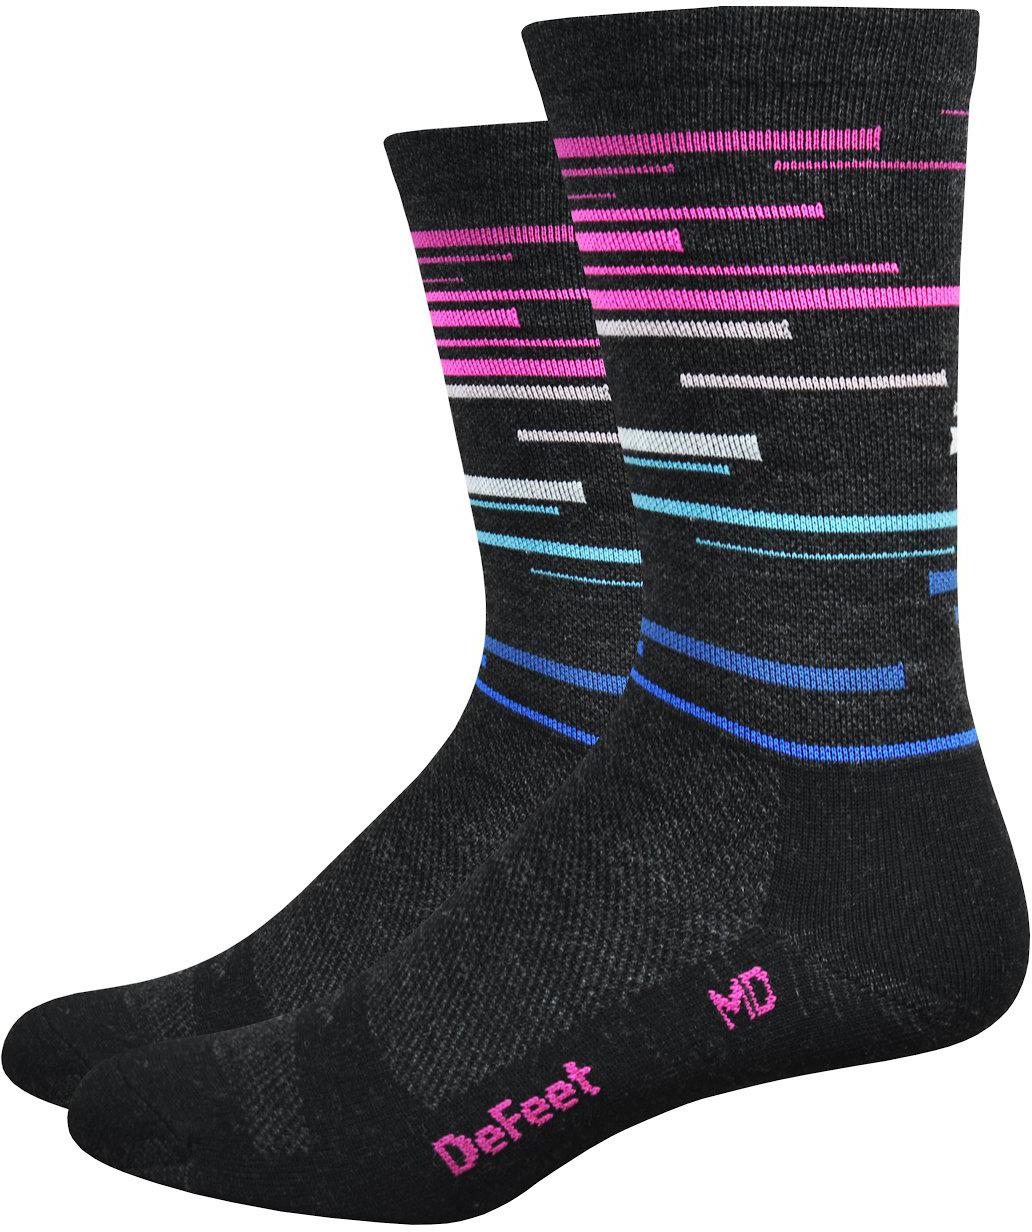 Defeet Wooleator 6 Dna Socks  Charcoal/blue/pink